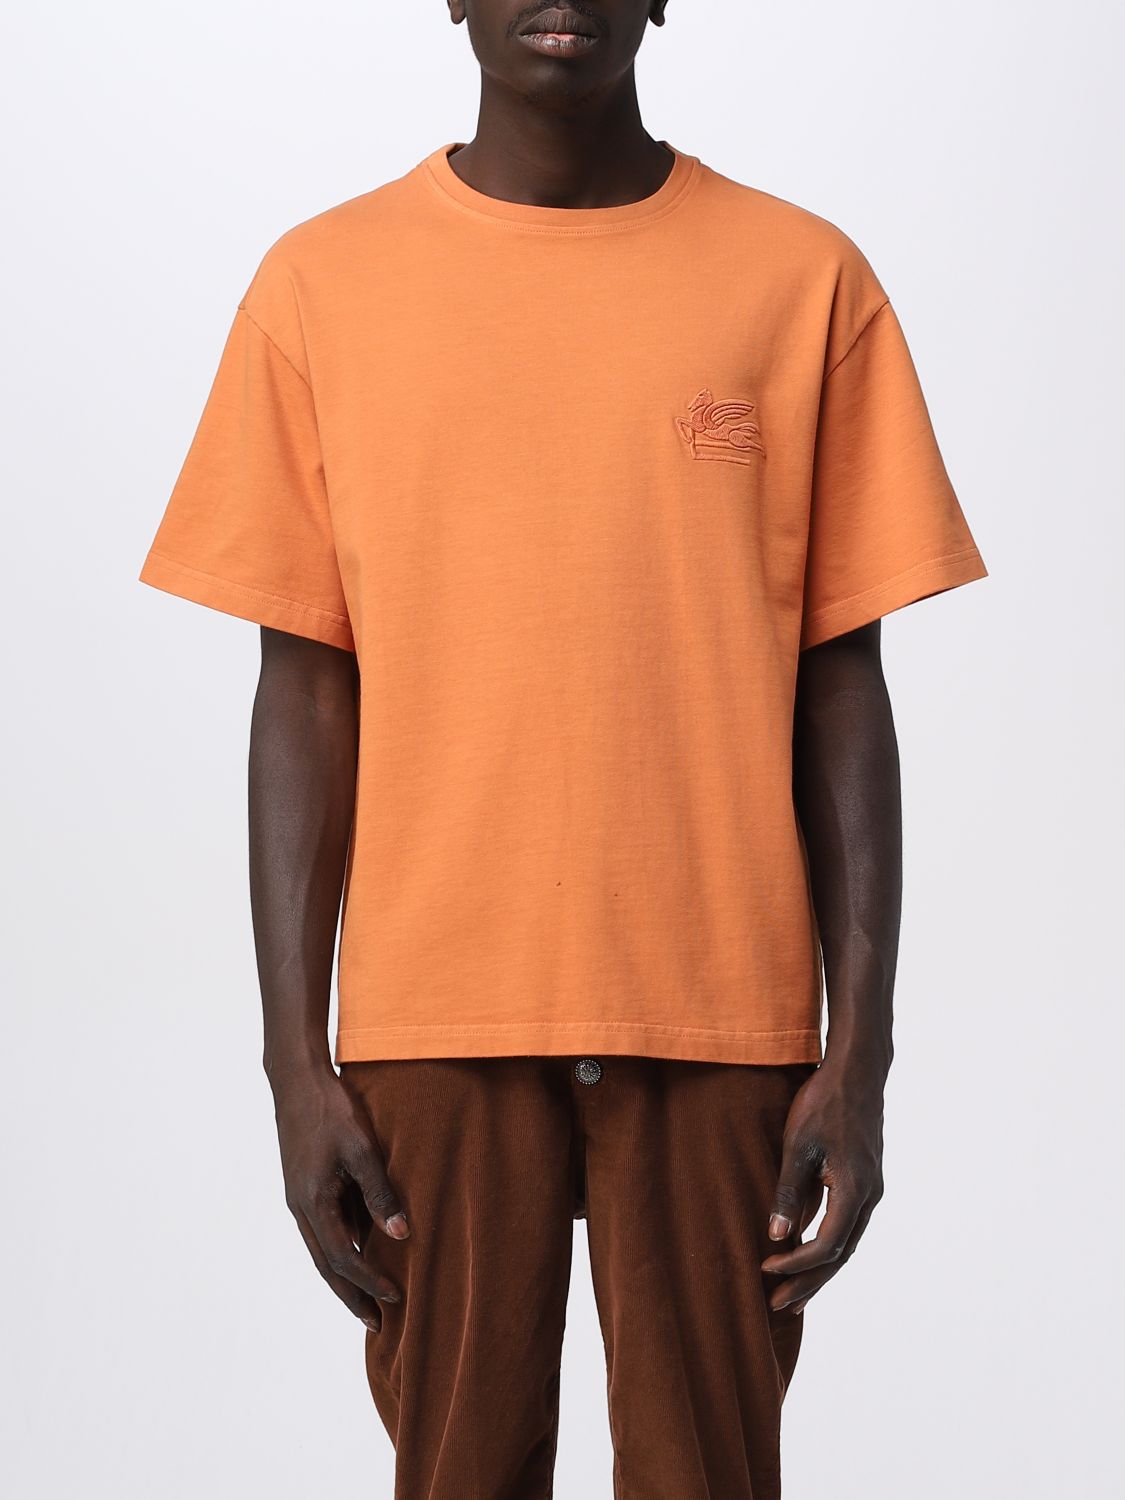 Studio Tangerine  tangerine clothes